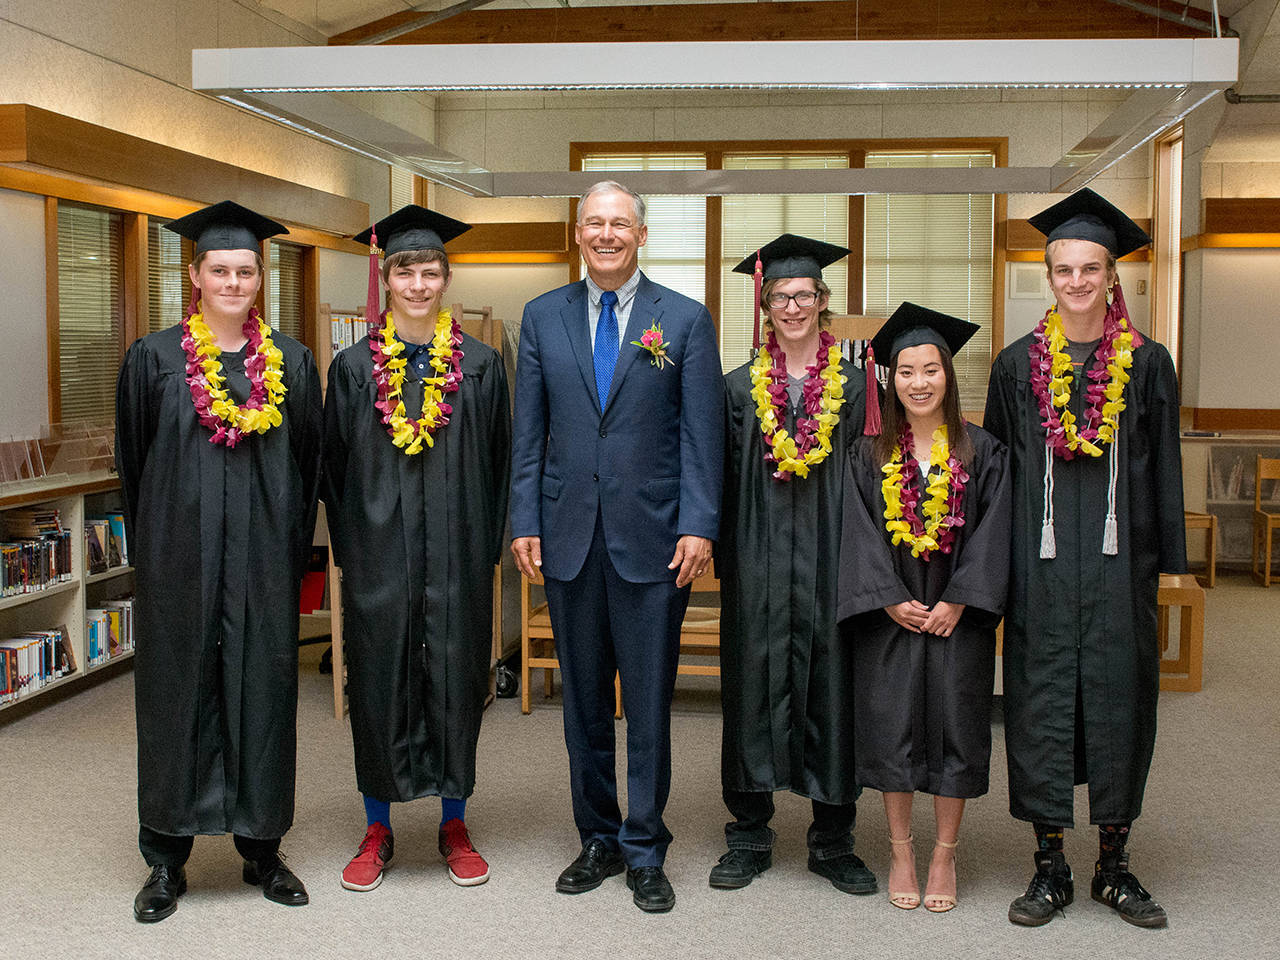 Lopez School class of 2017 graduation: five graduates and a governor